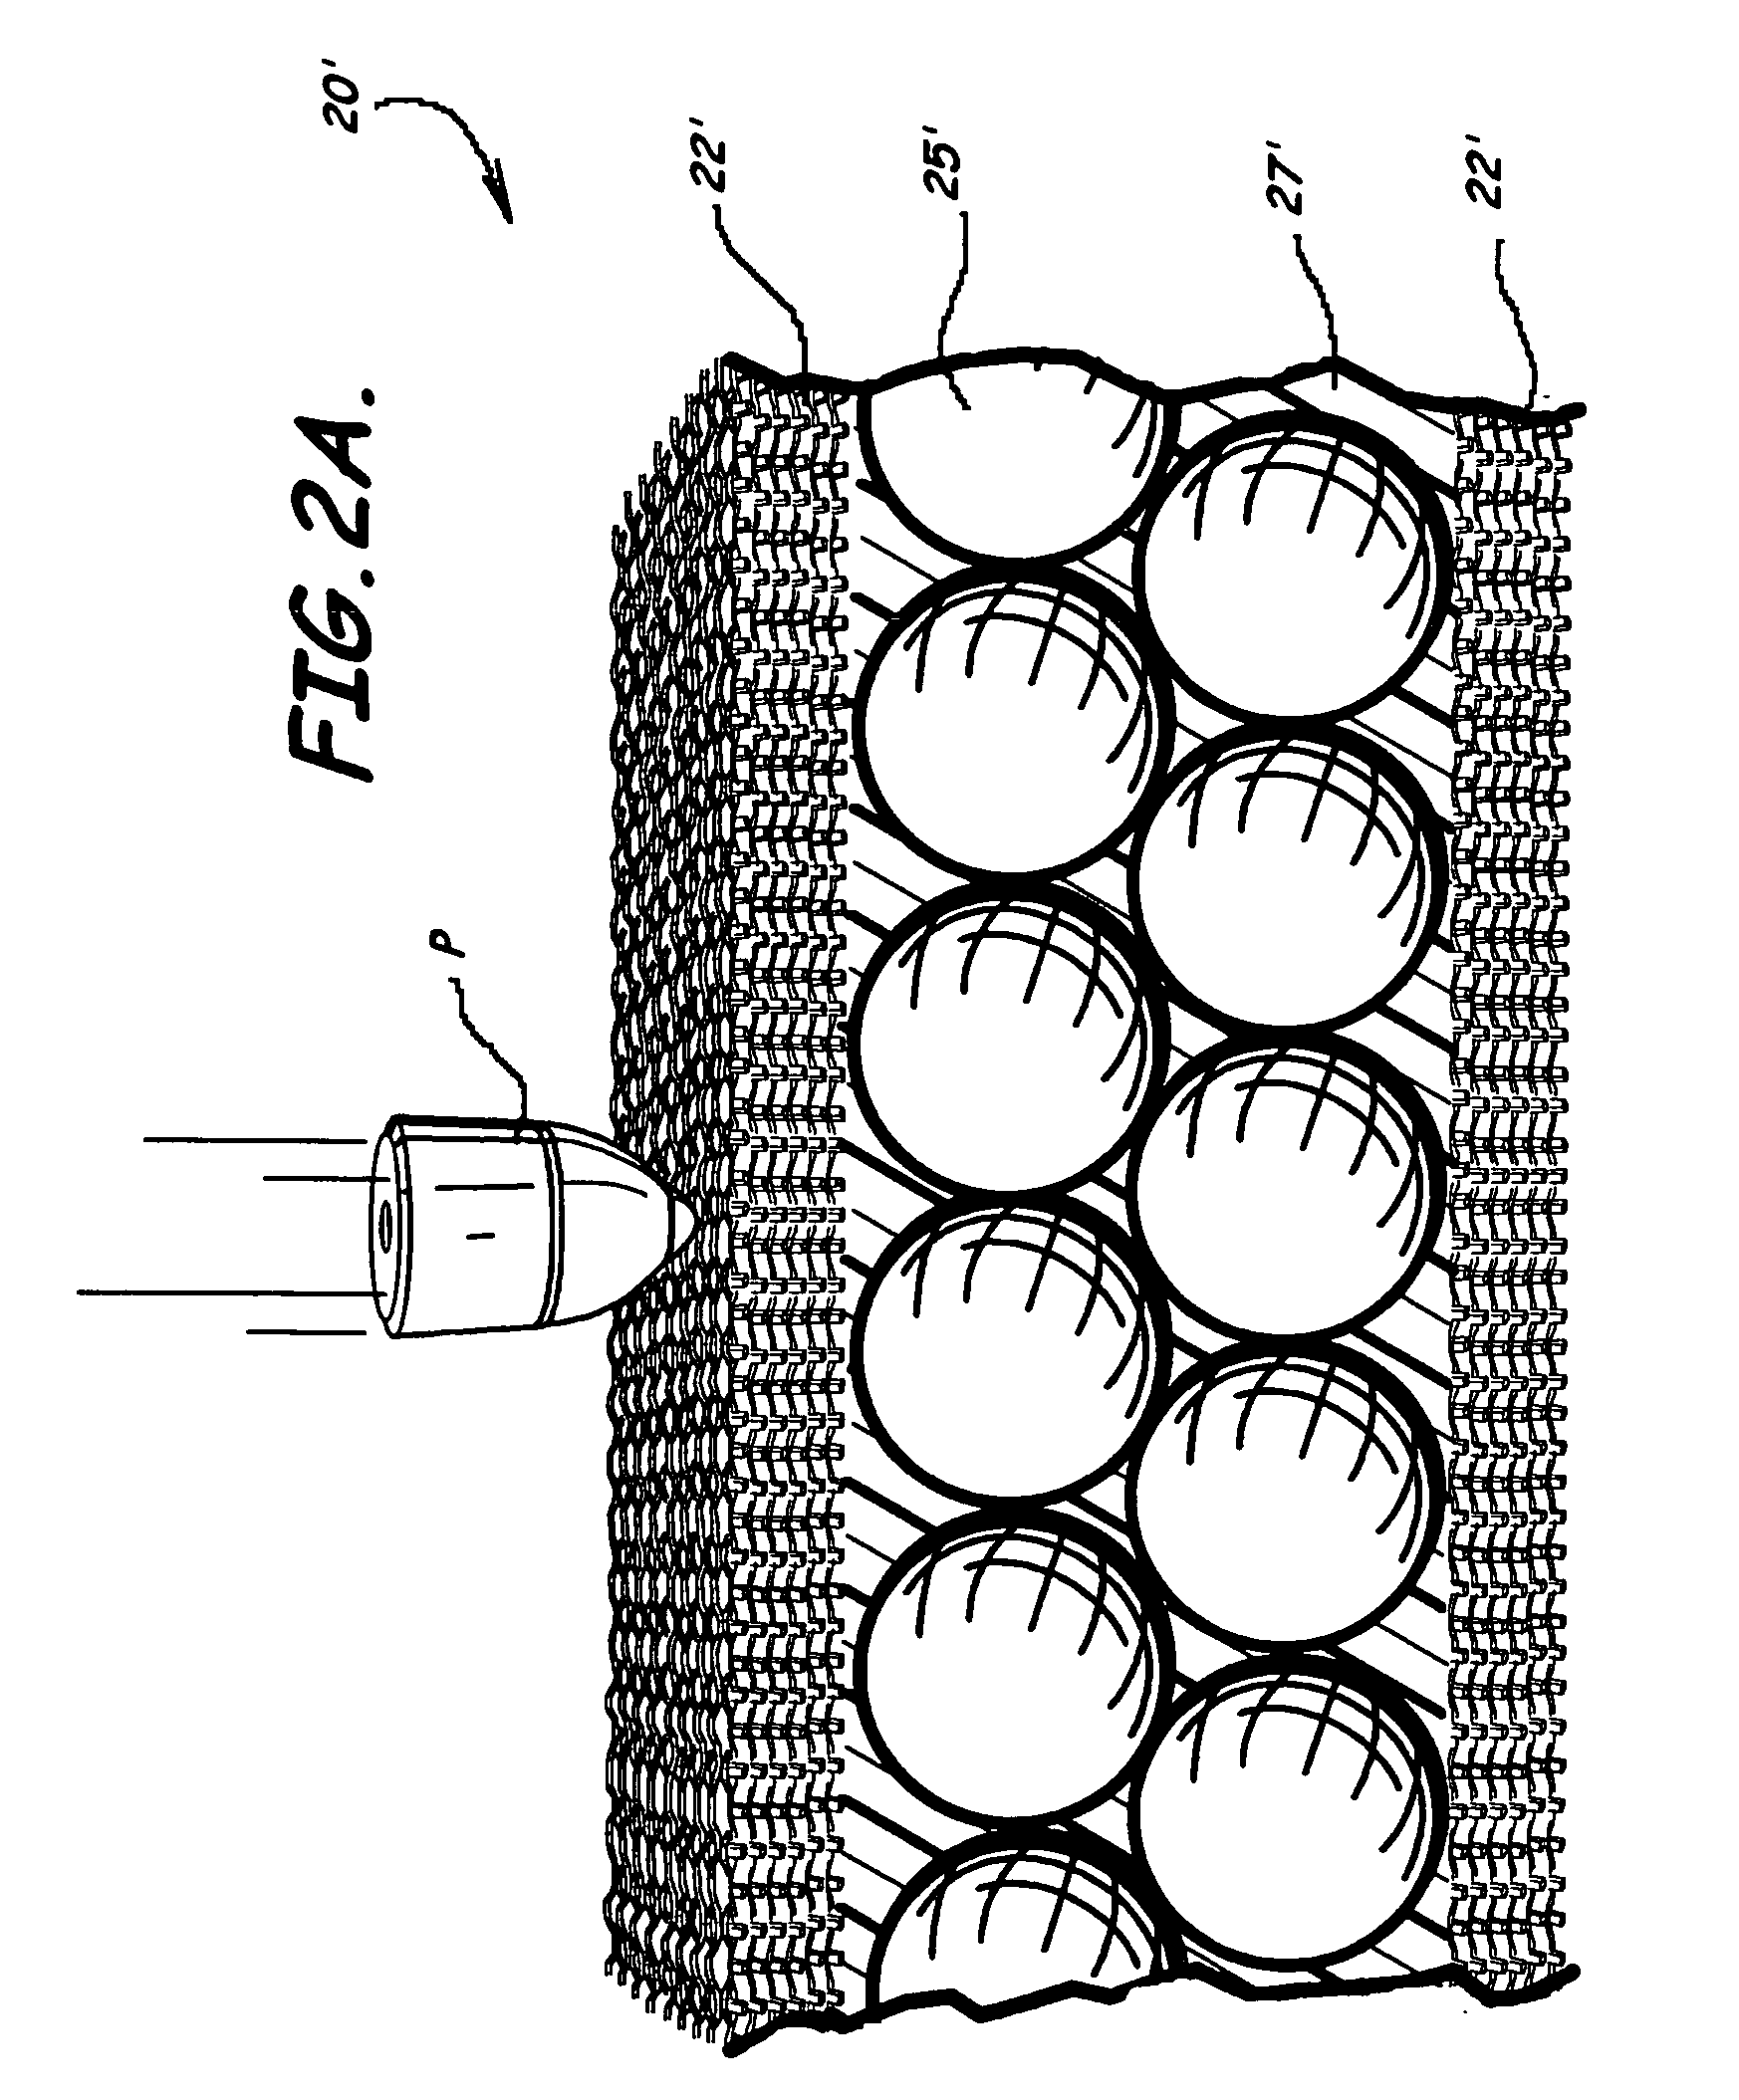 Ballistics panel, structure, and associated methods